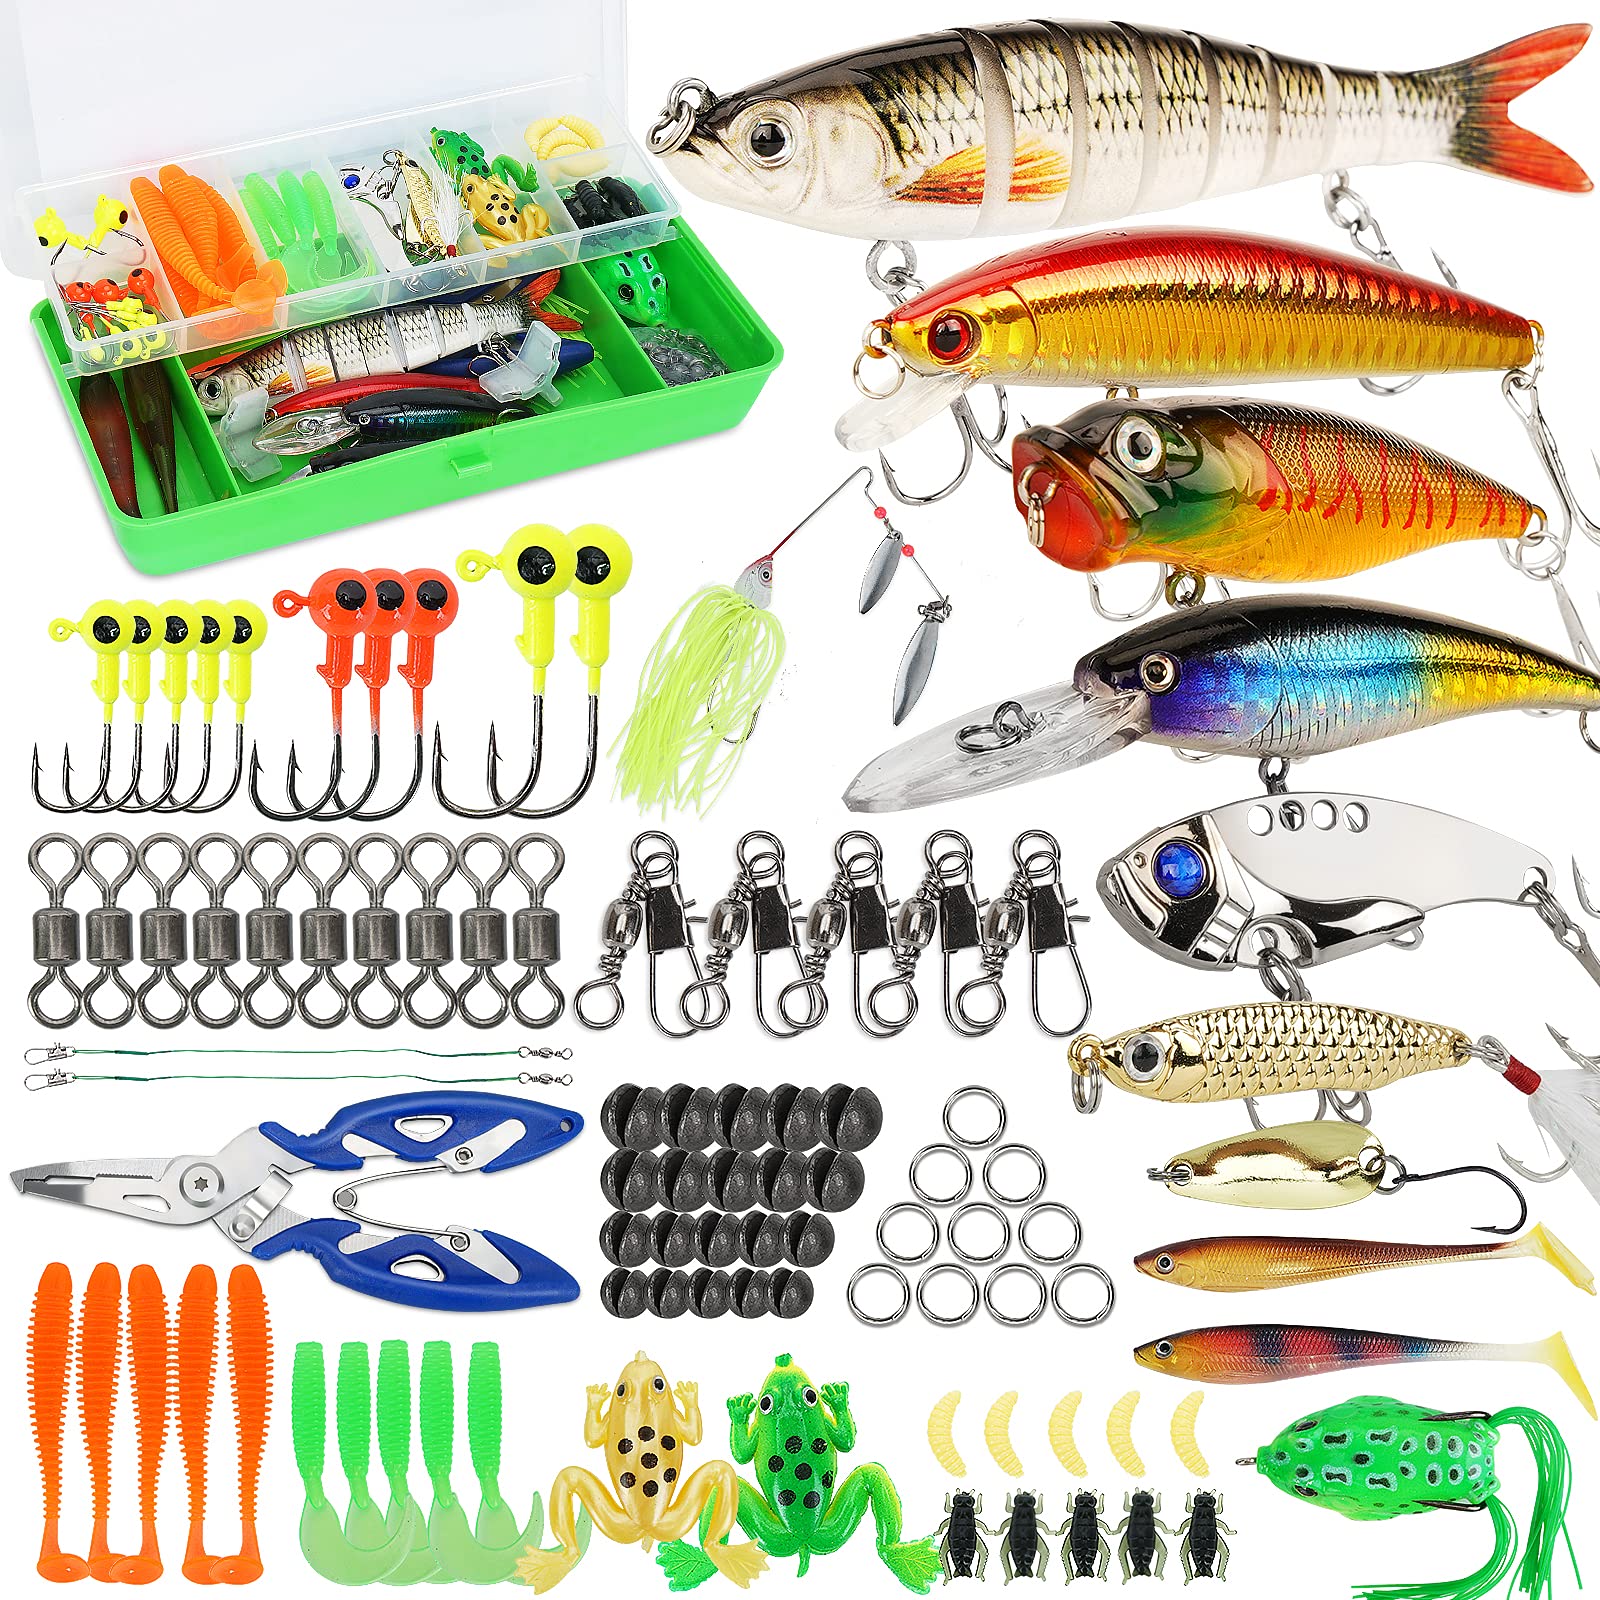 Fishing Equipment & Accessories